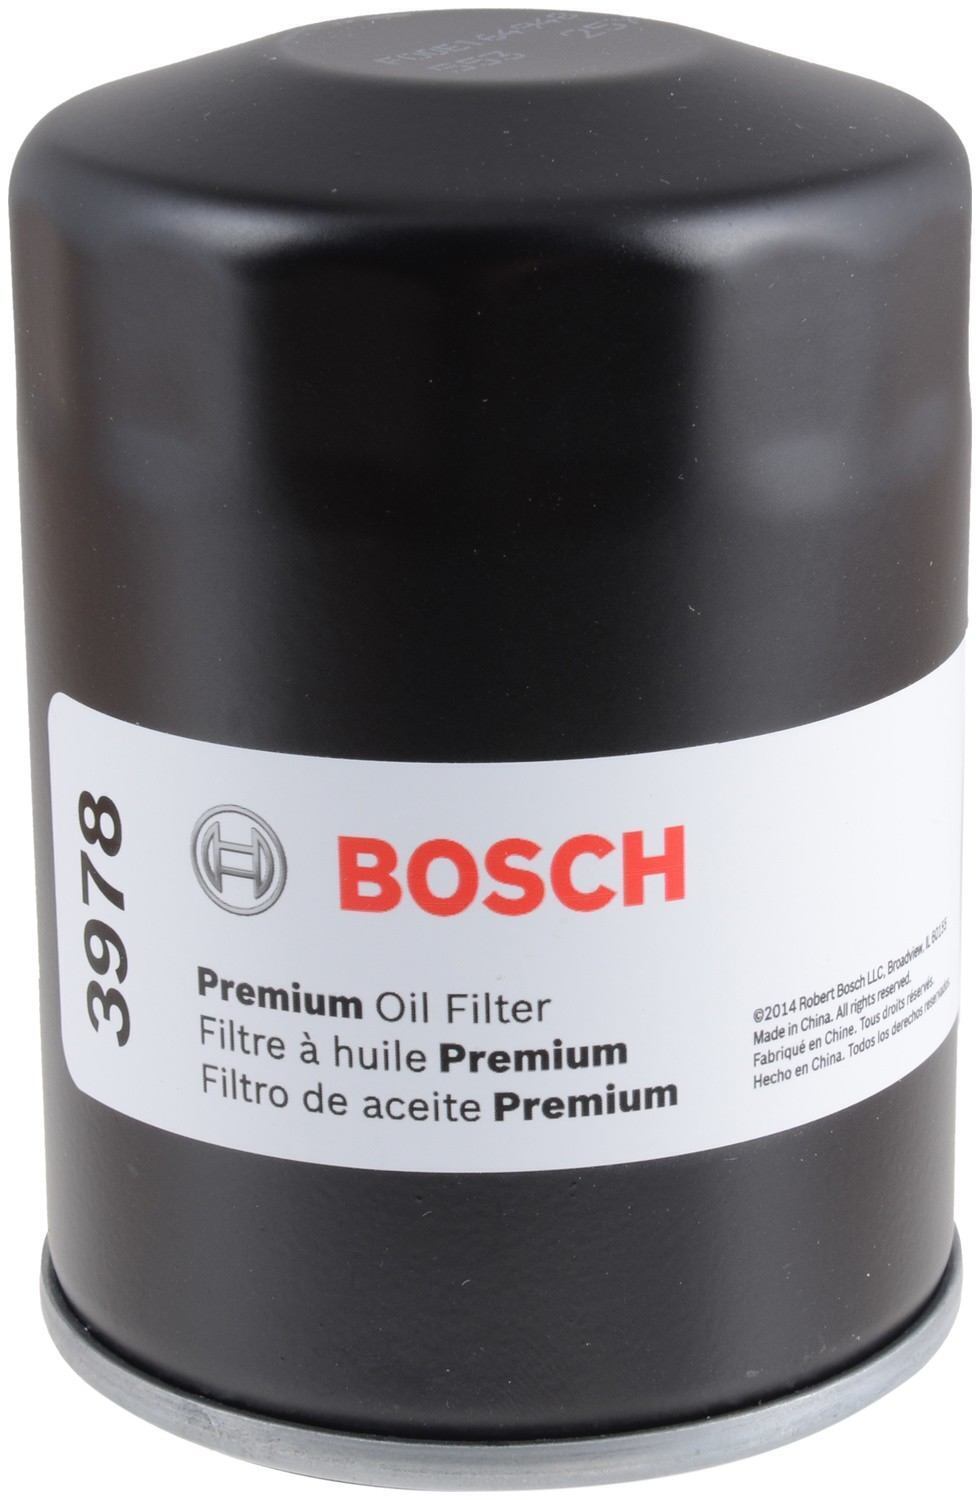 Bosch Premium Engine Oil Filter Oil Filter For Bentley Jaguar XJ6 XJ8 Land Rover